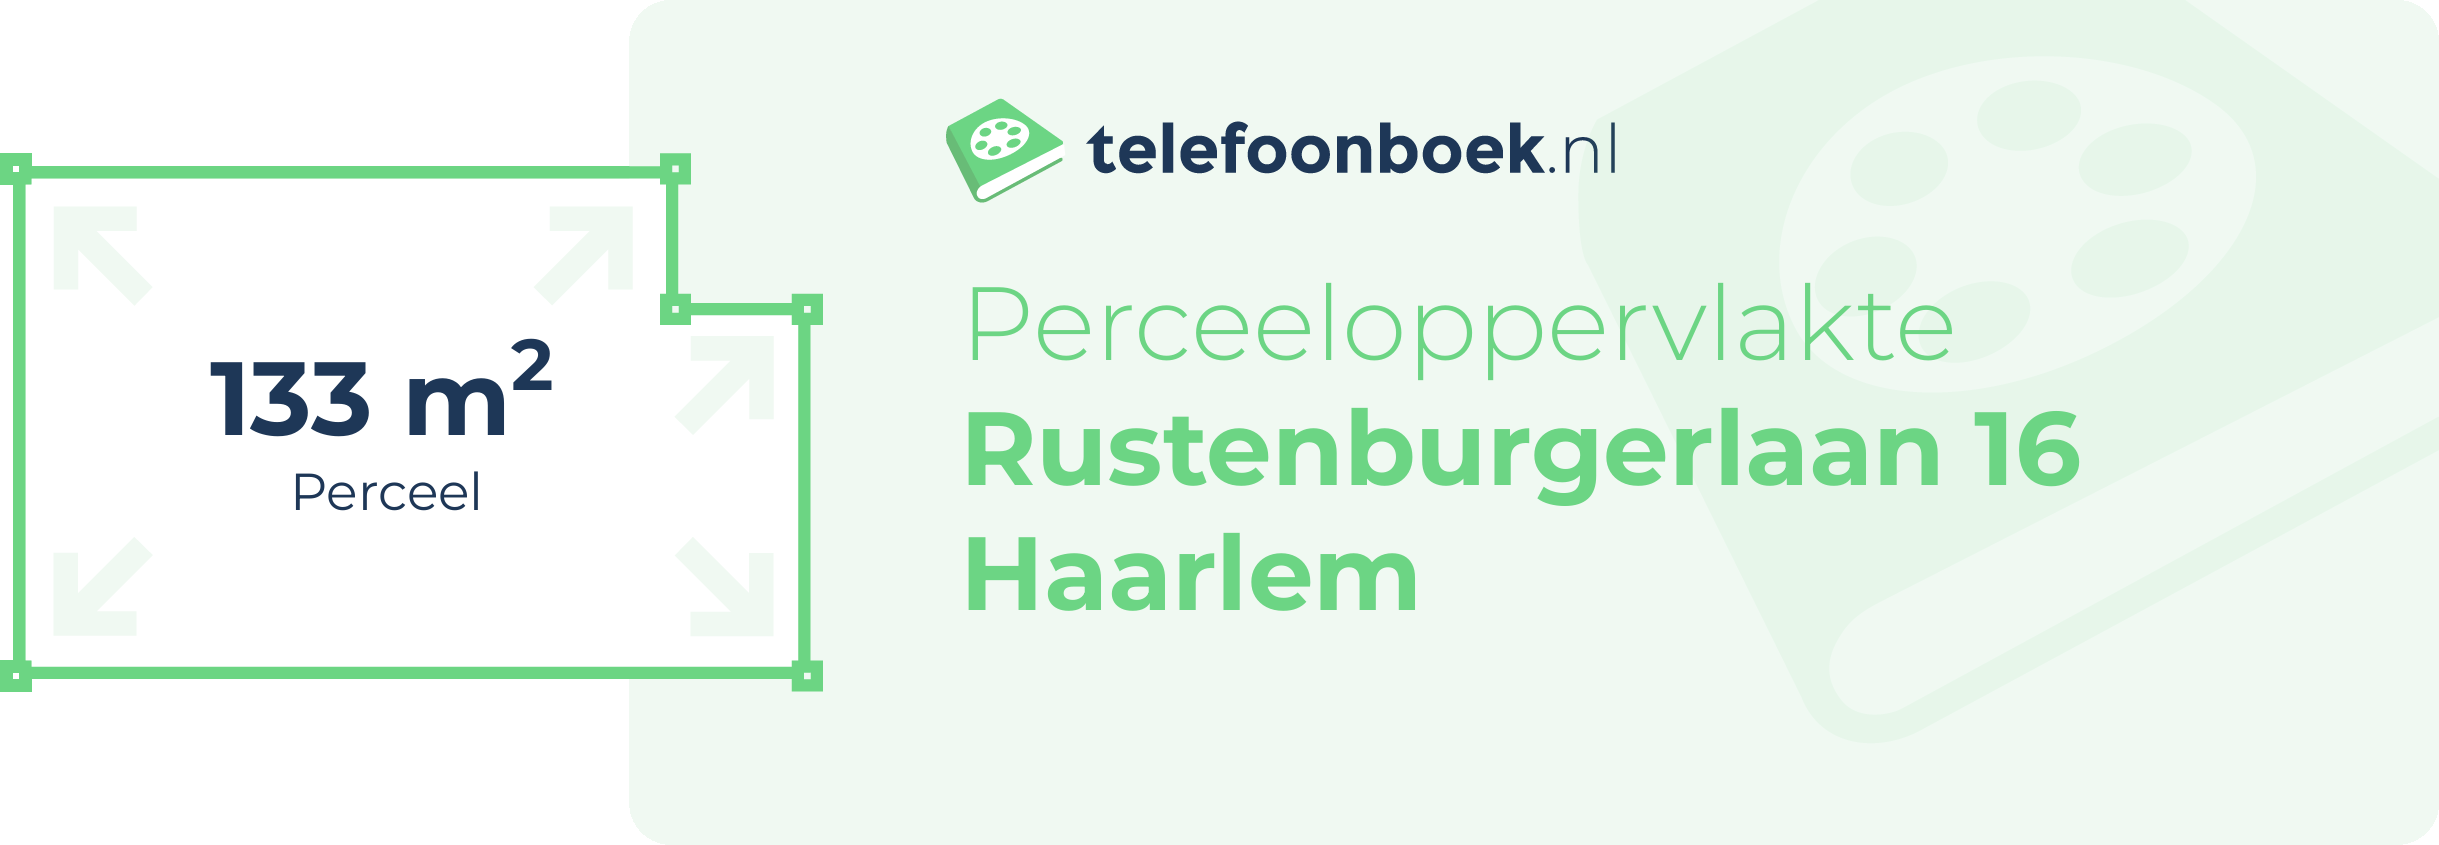 Perceeloppervlakte Rustenburgerlaan 16 Haarlem